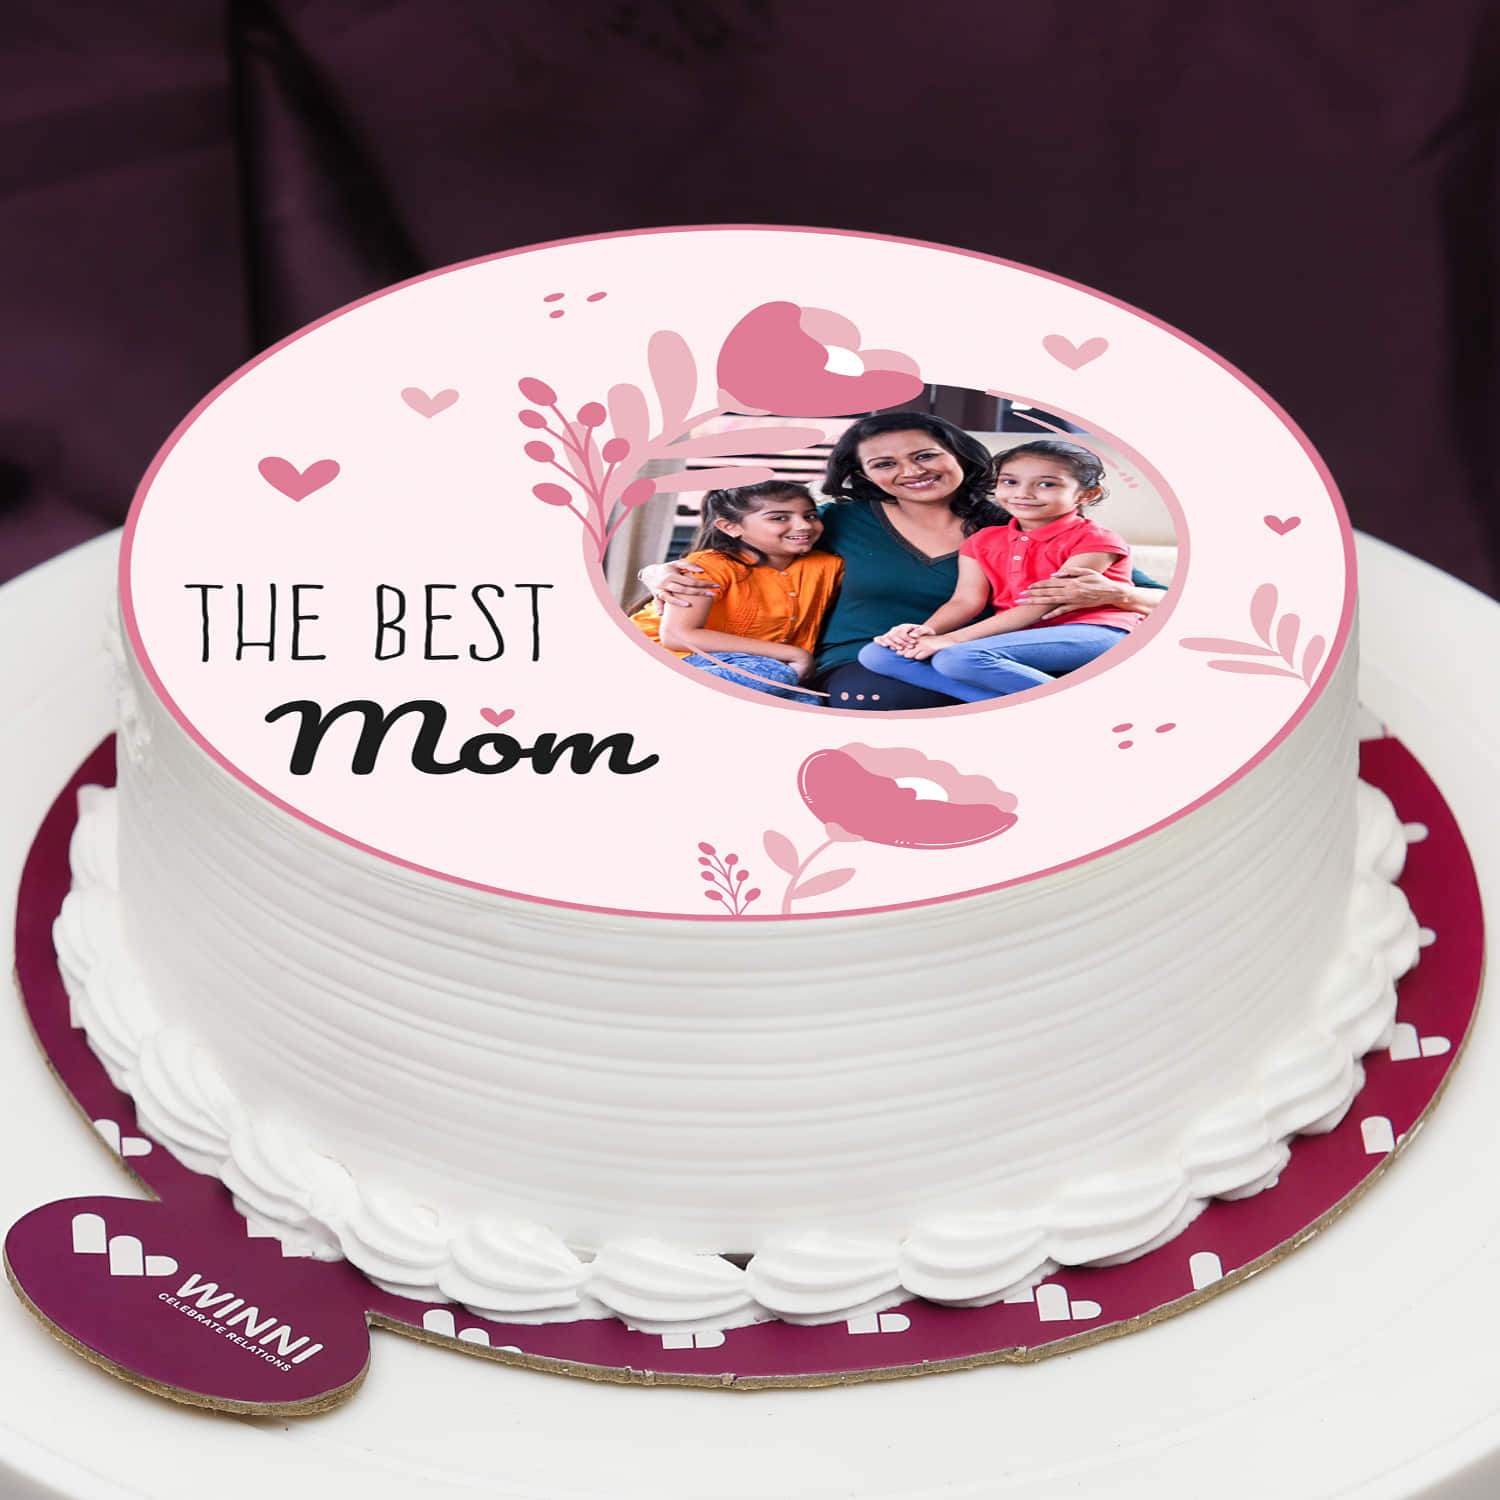 Baking Mumma in Satellite,Ahmedabad - Best Cake Shops in Ahmedabad -  Justdial